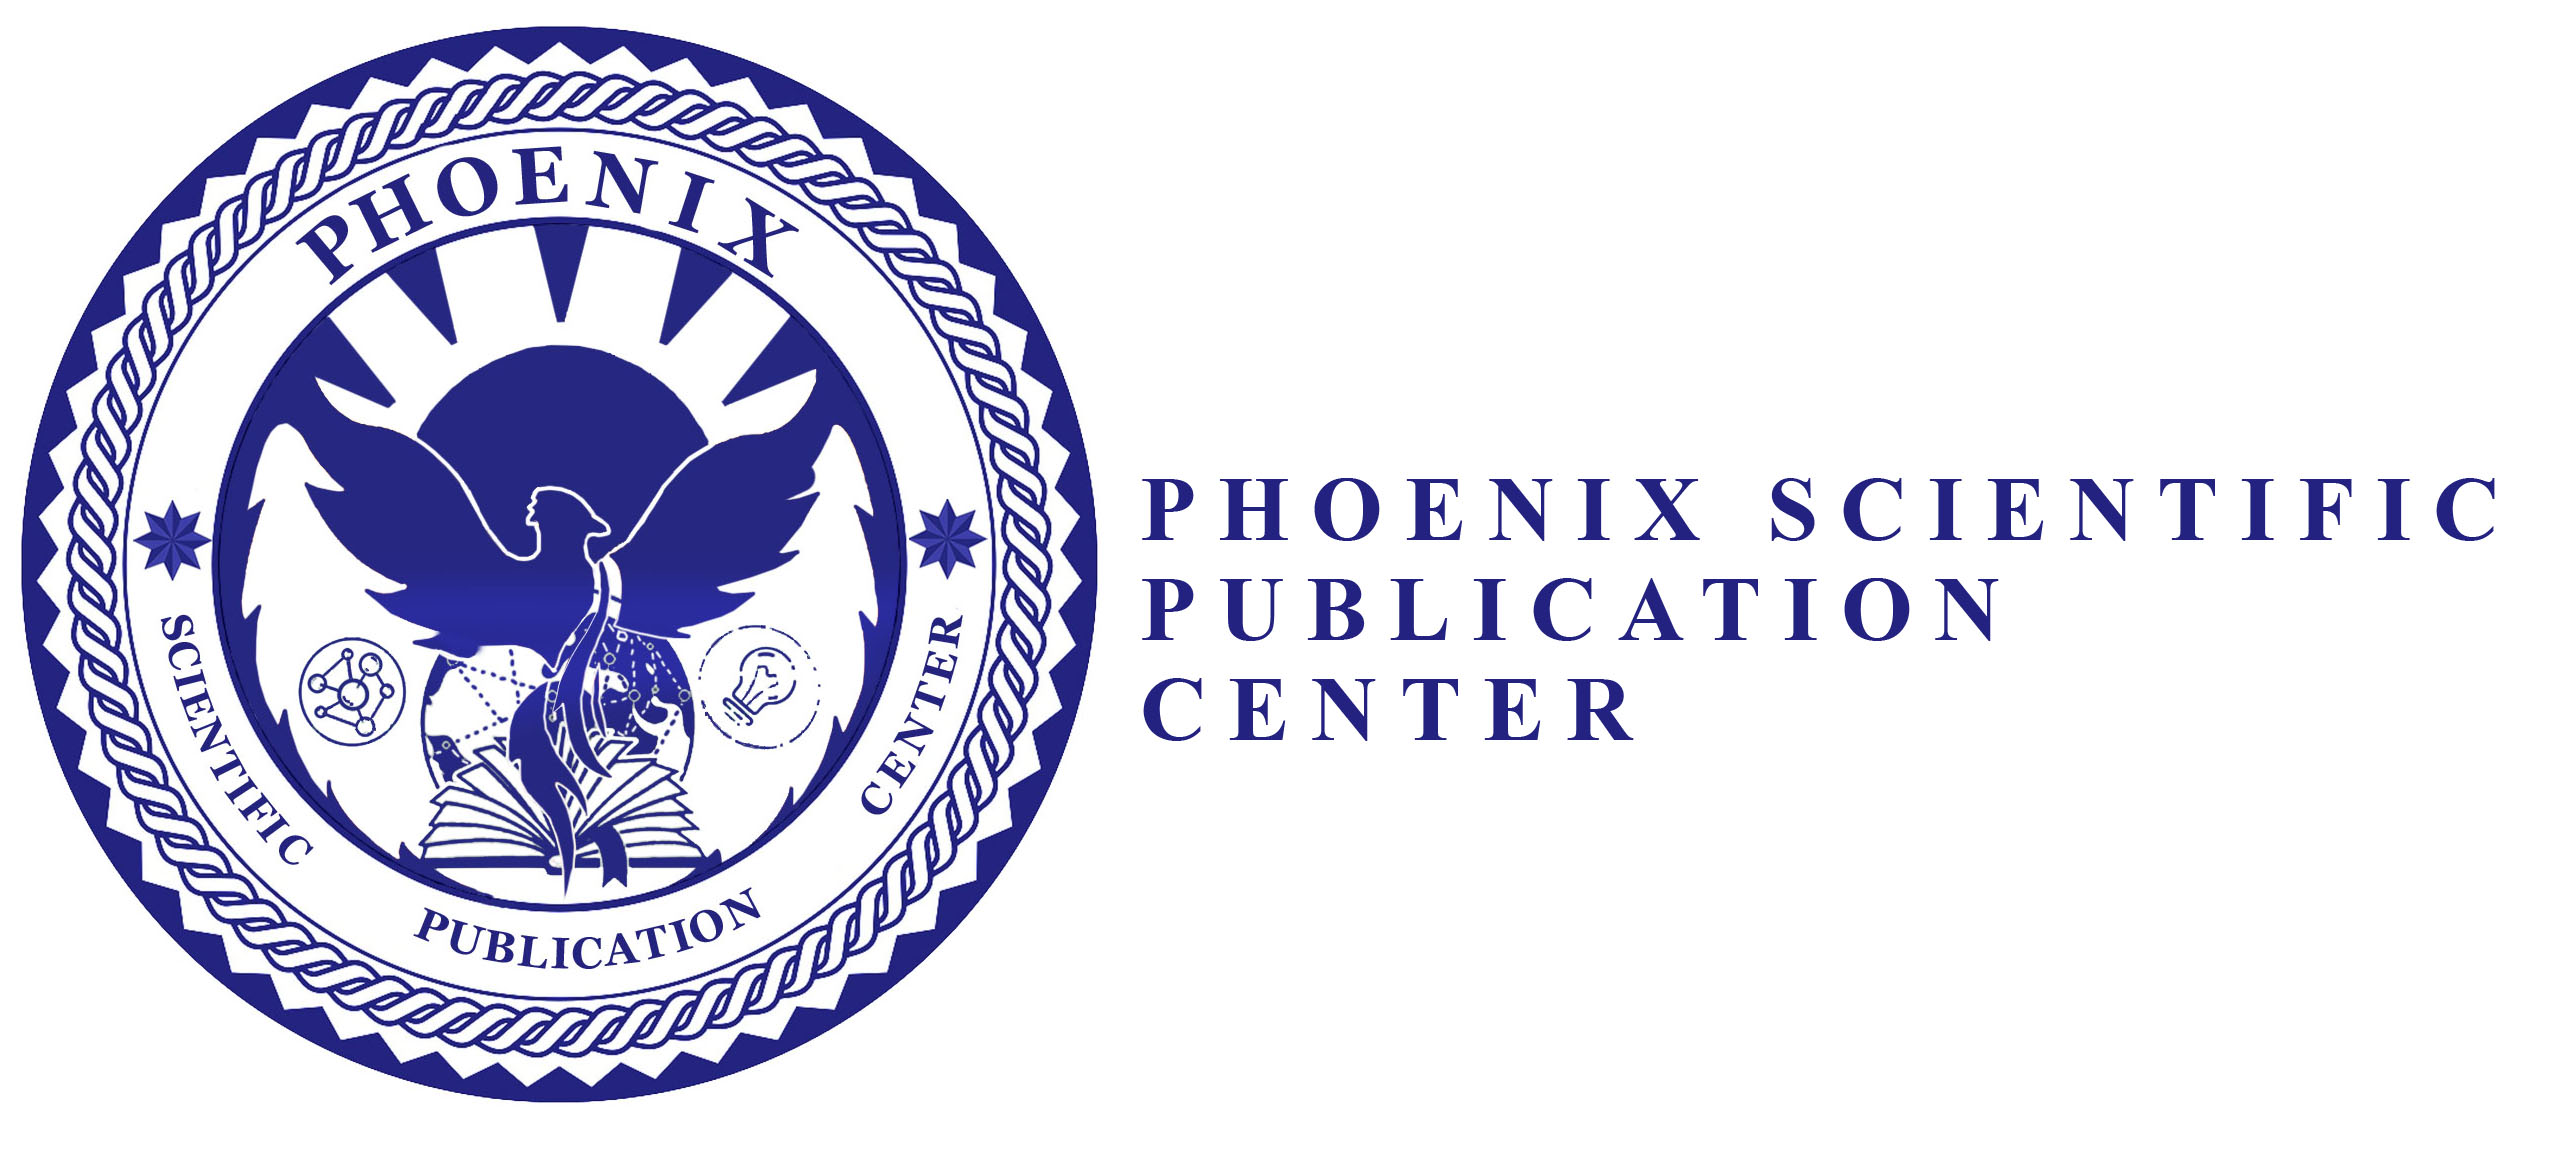 Phoenix scientific publication center